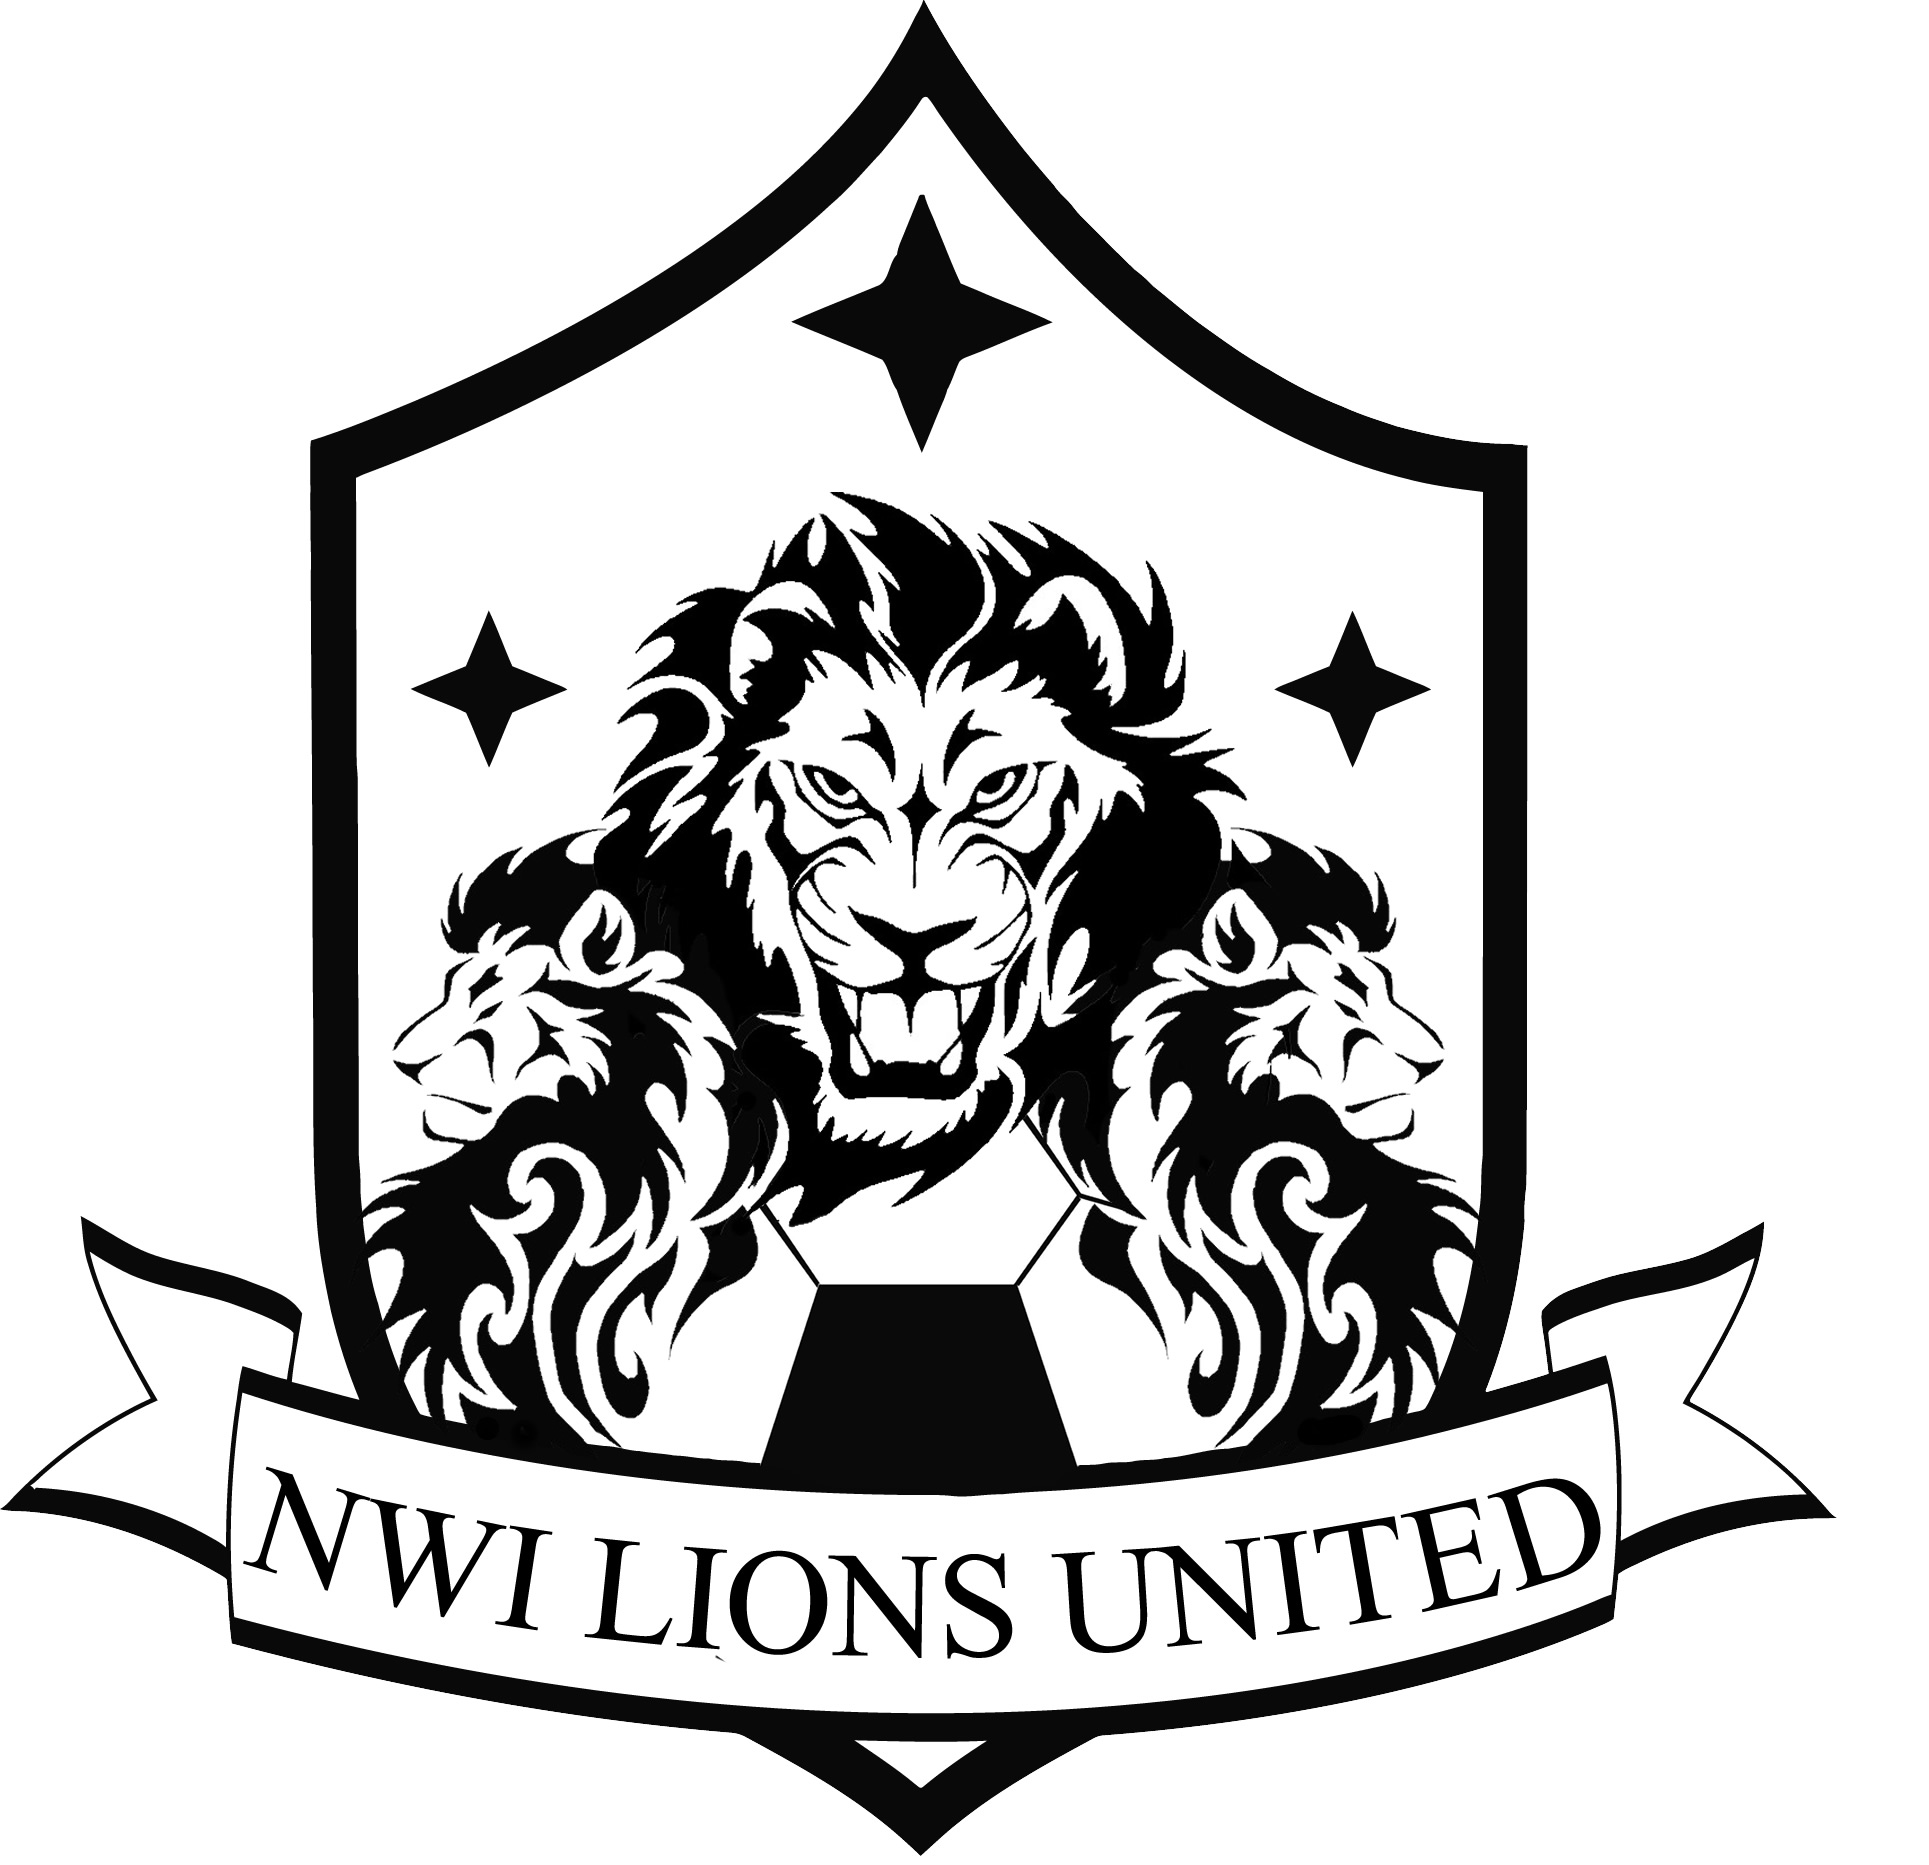 NWI Lions United team badge